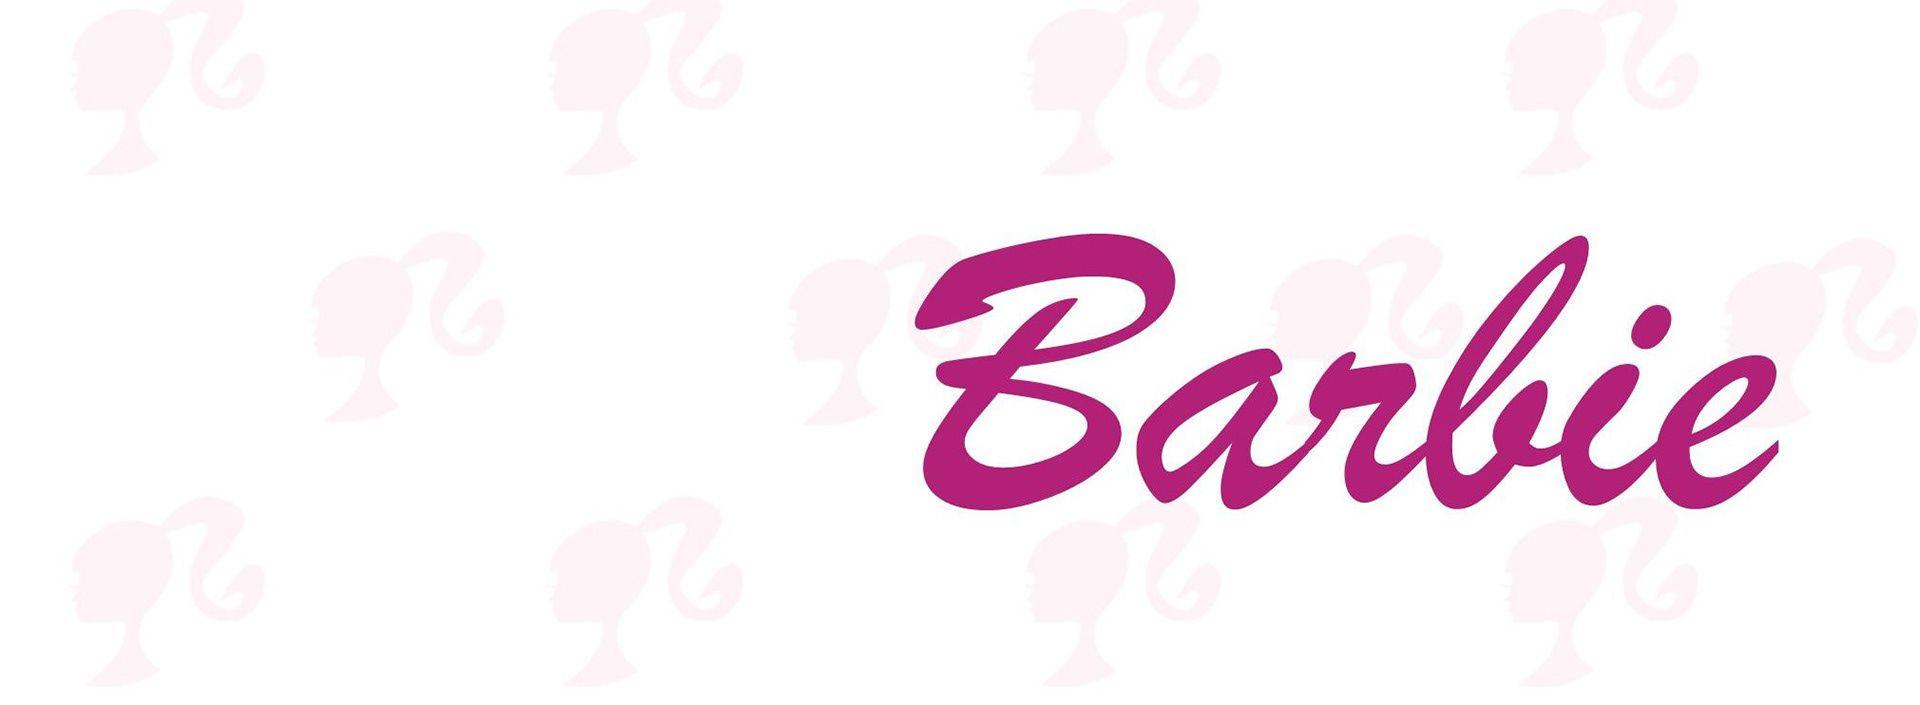 Barbie 2017 Logo - Keaton Tyler - Barbie Retail